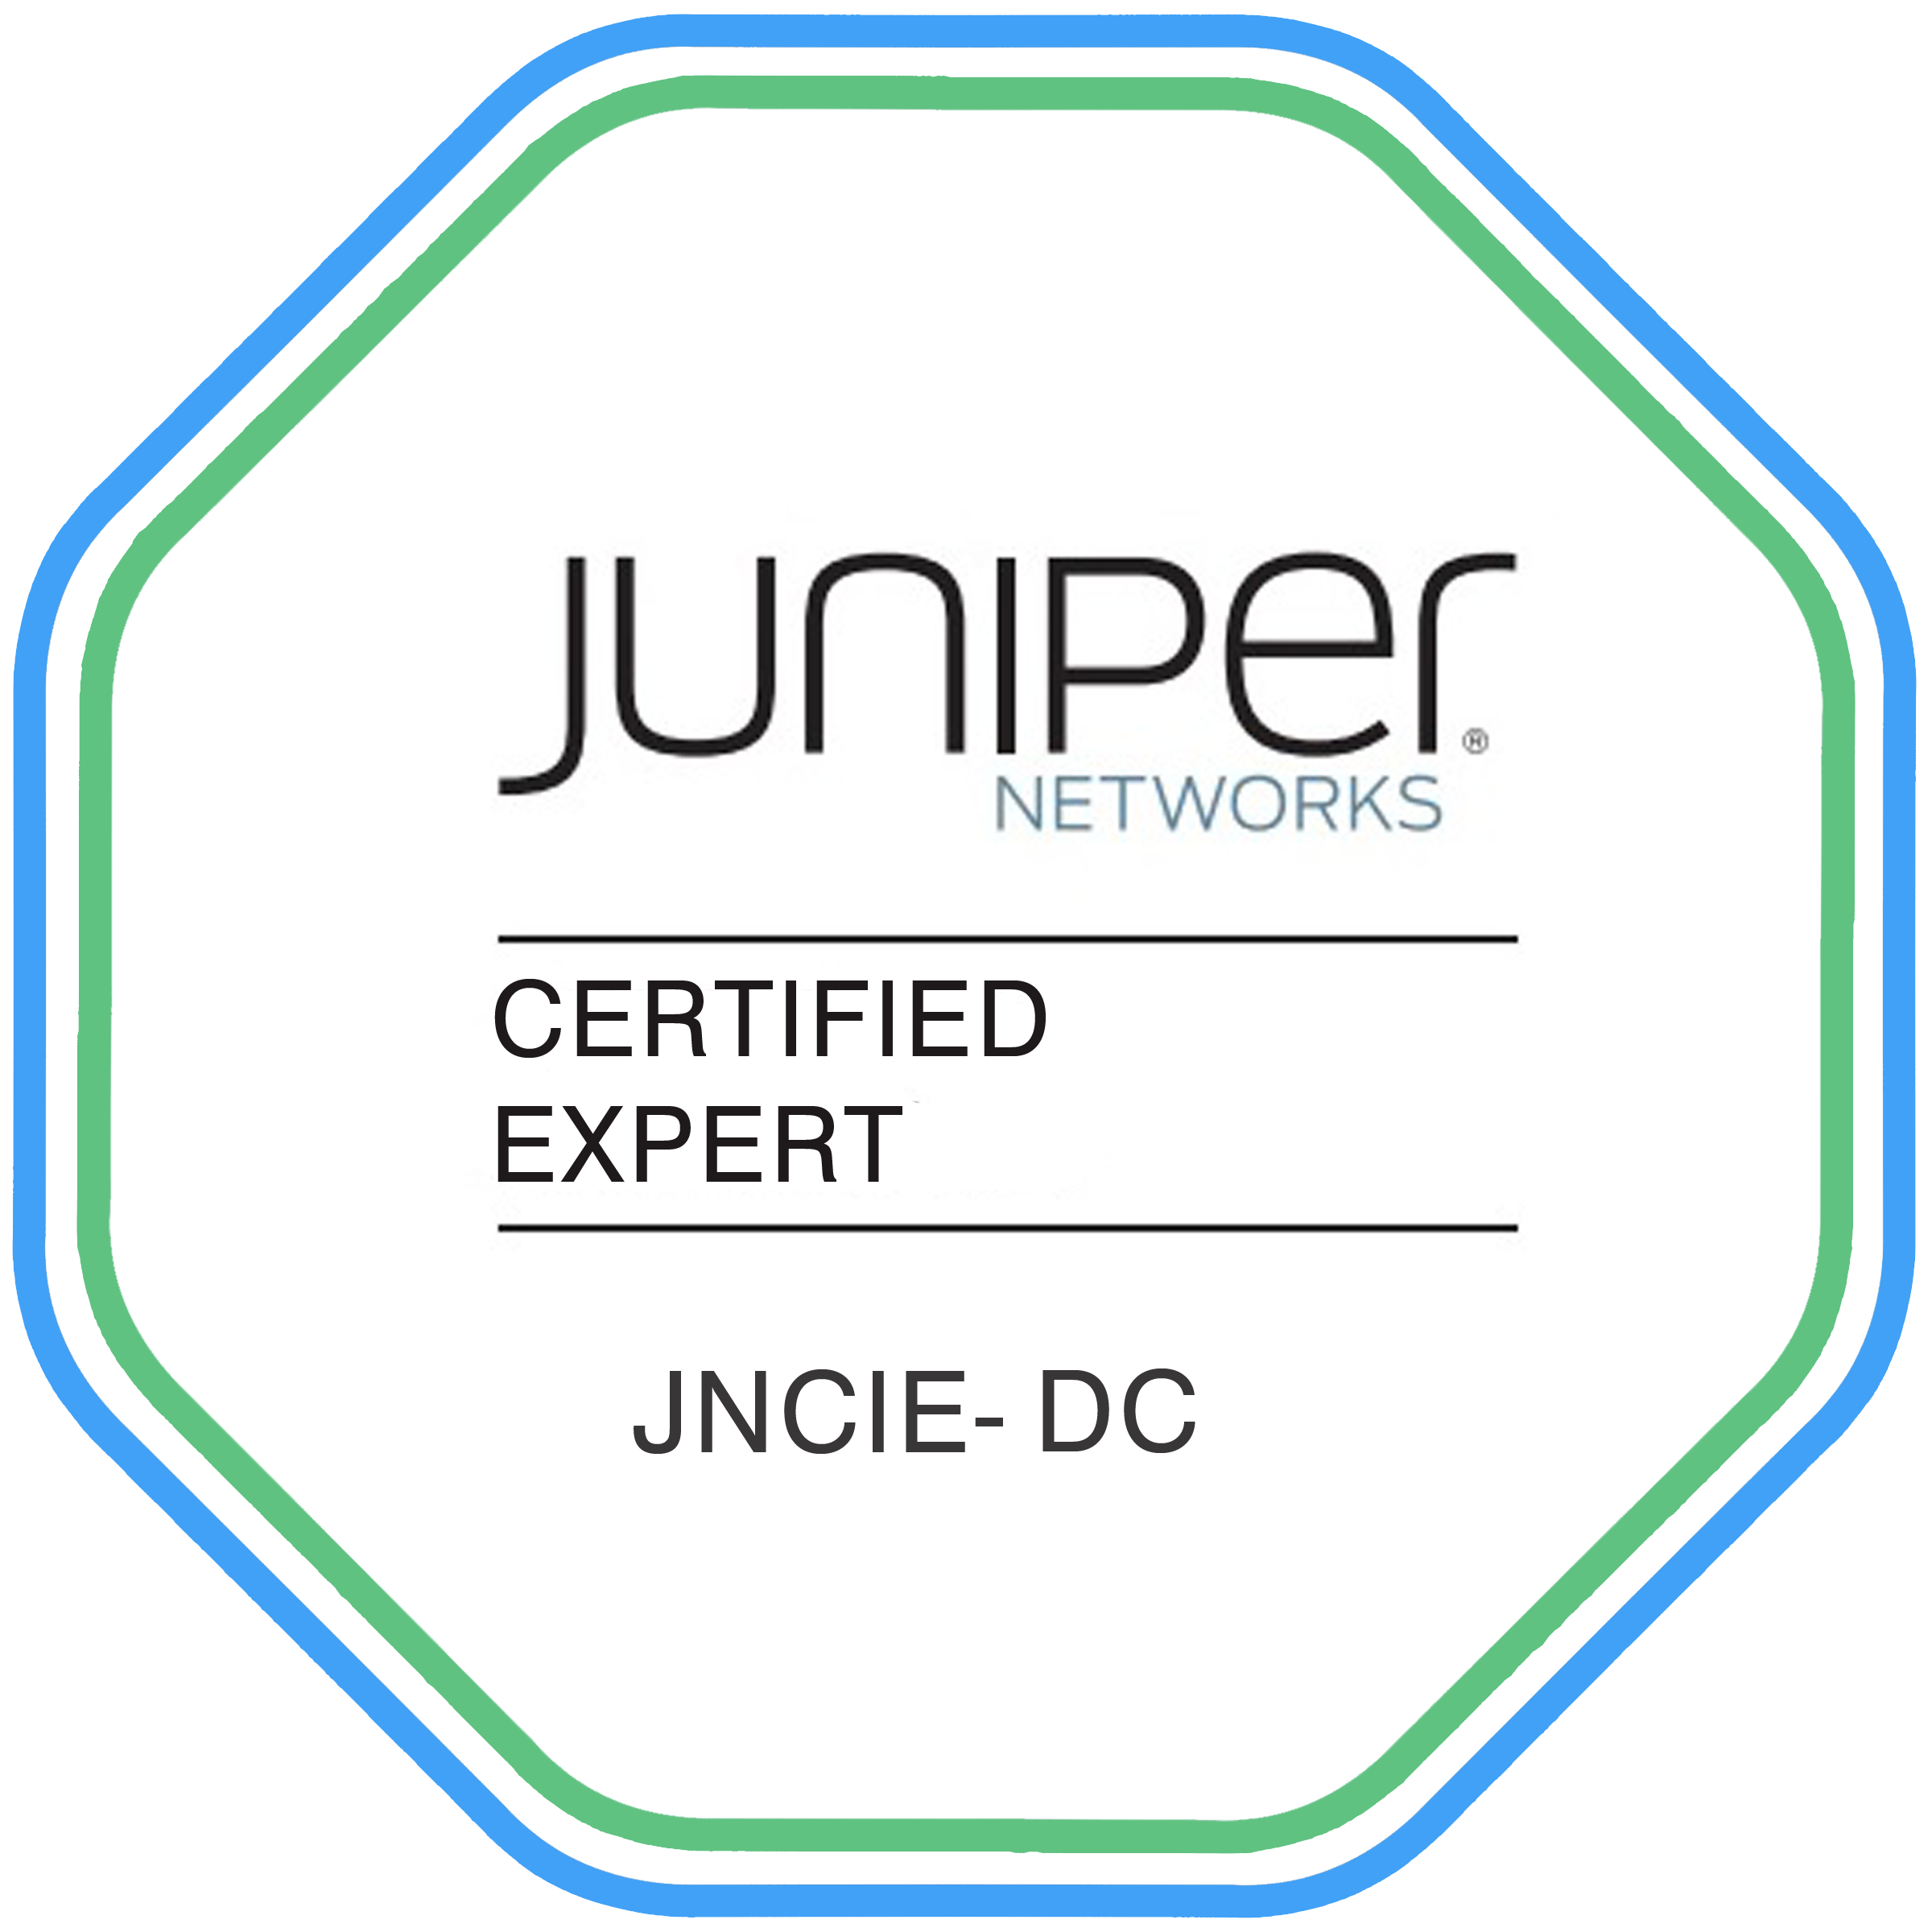 Data Center Certification Track ( JNCIE- DC) Training in Mumbai, India